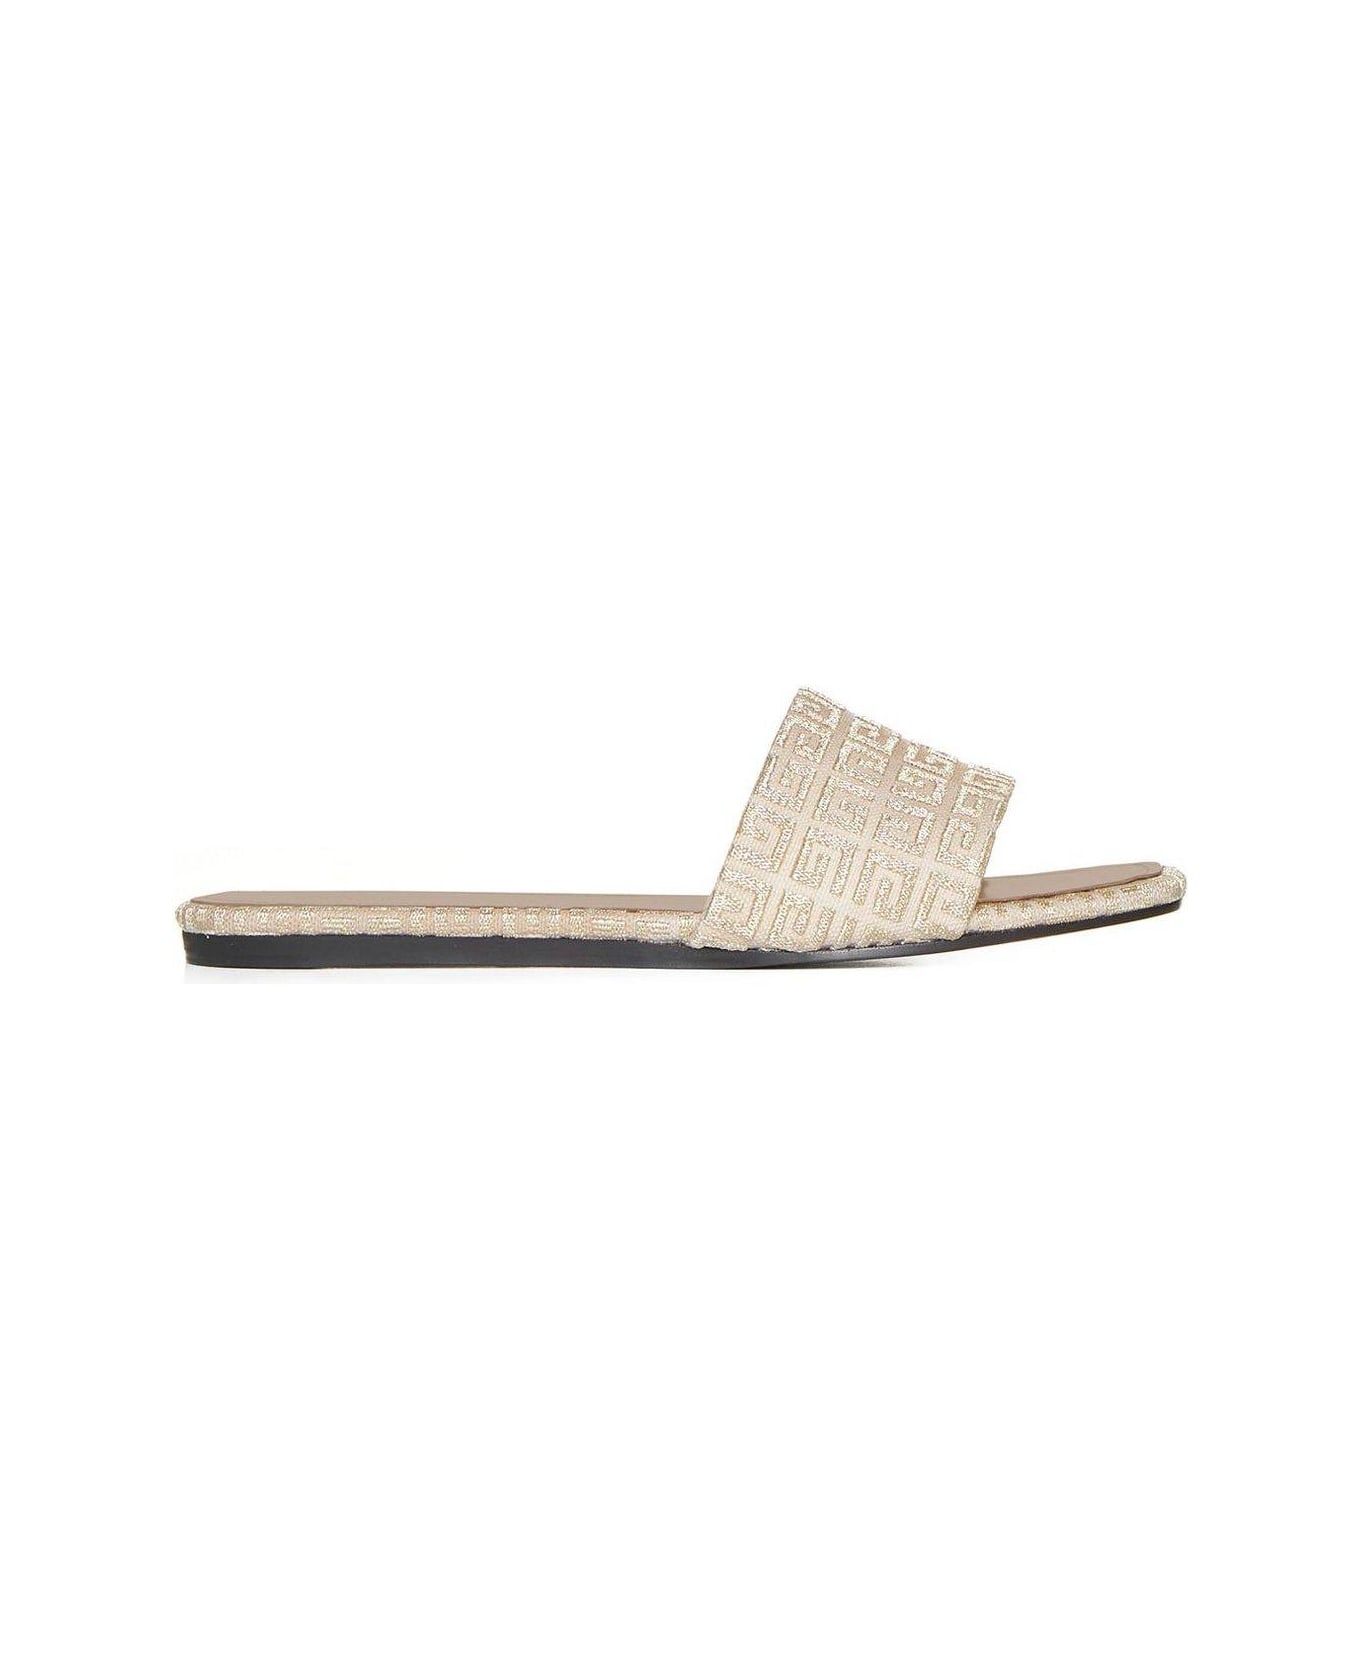 Givenchy 4g Motif Open-toe Sandals - Golden サンダル